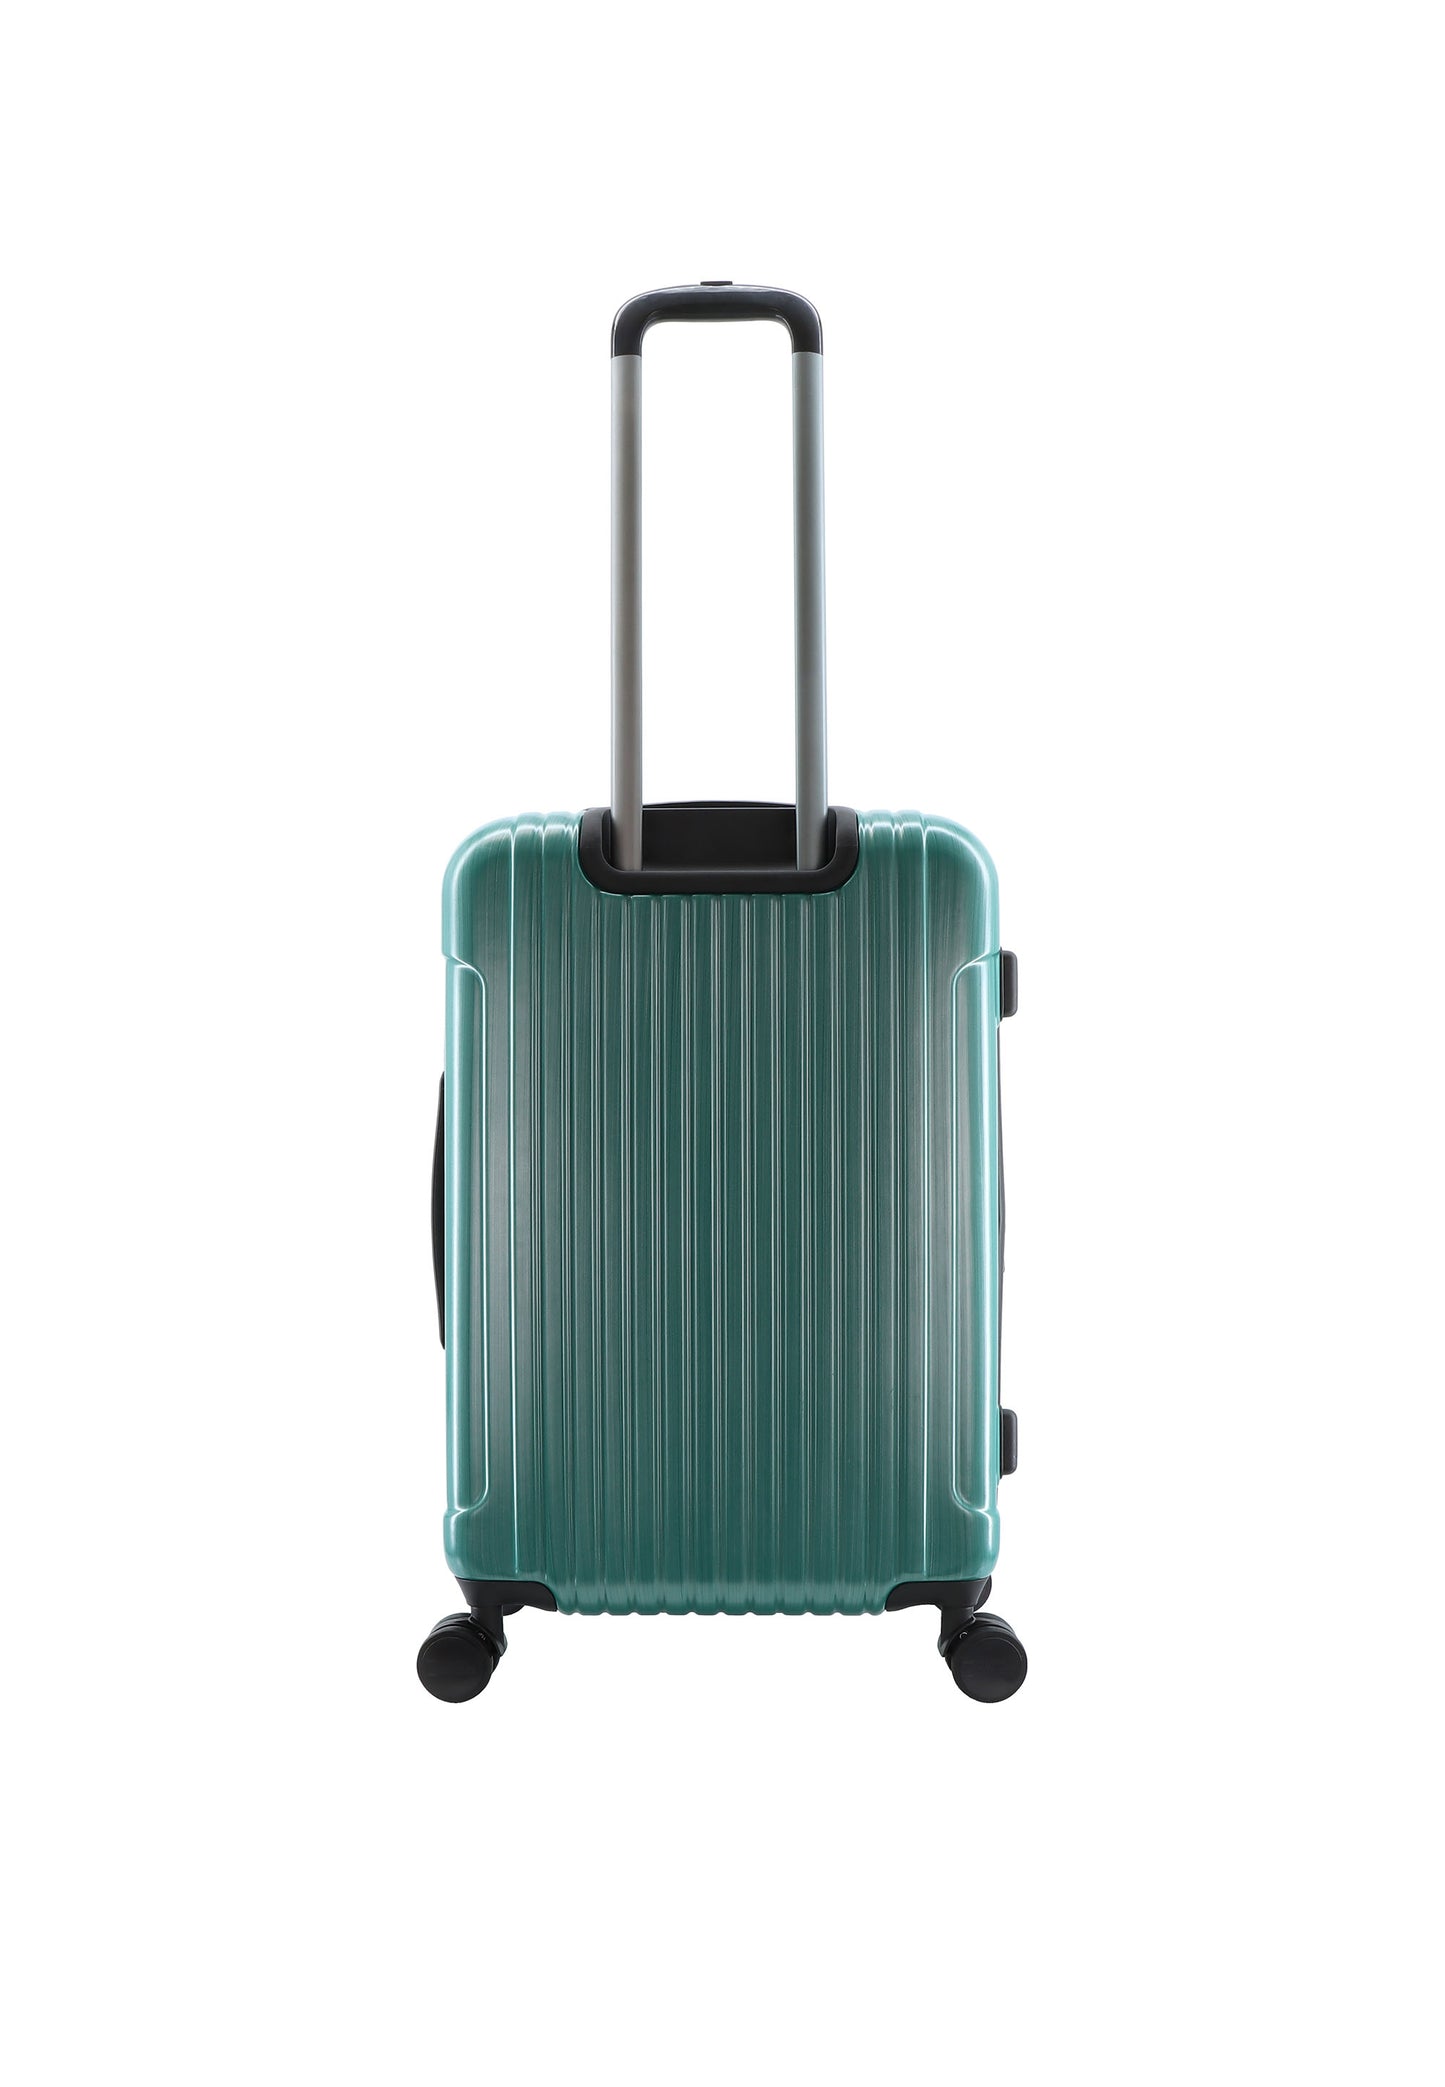 National Geographic Hard Case / Trolley / Travel Case - 67 cm (Moyen) - Transit - Jade